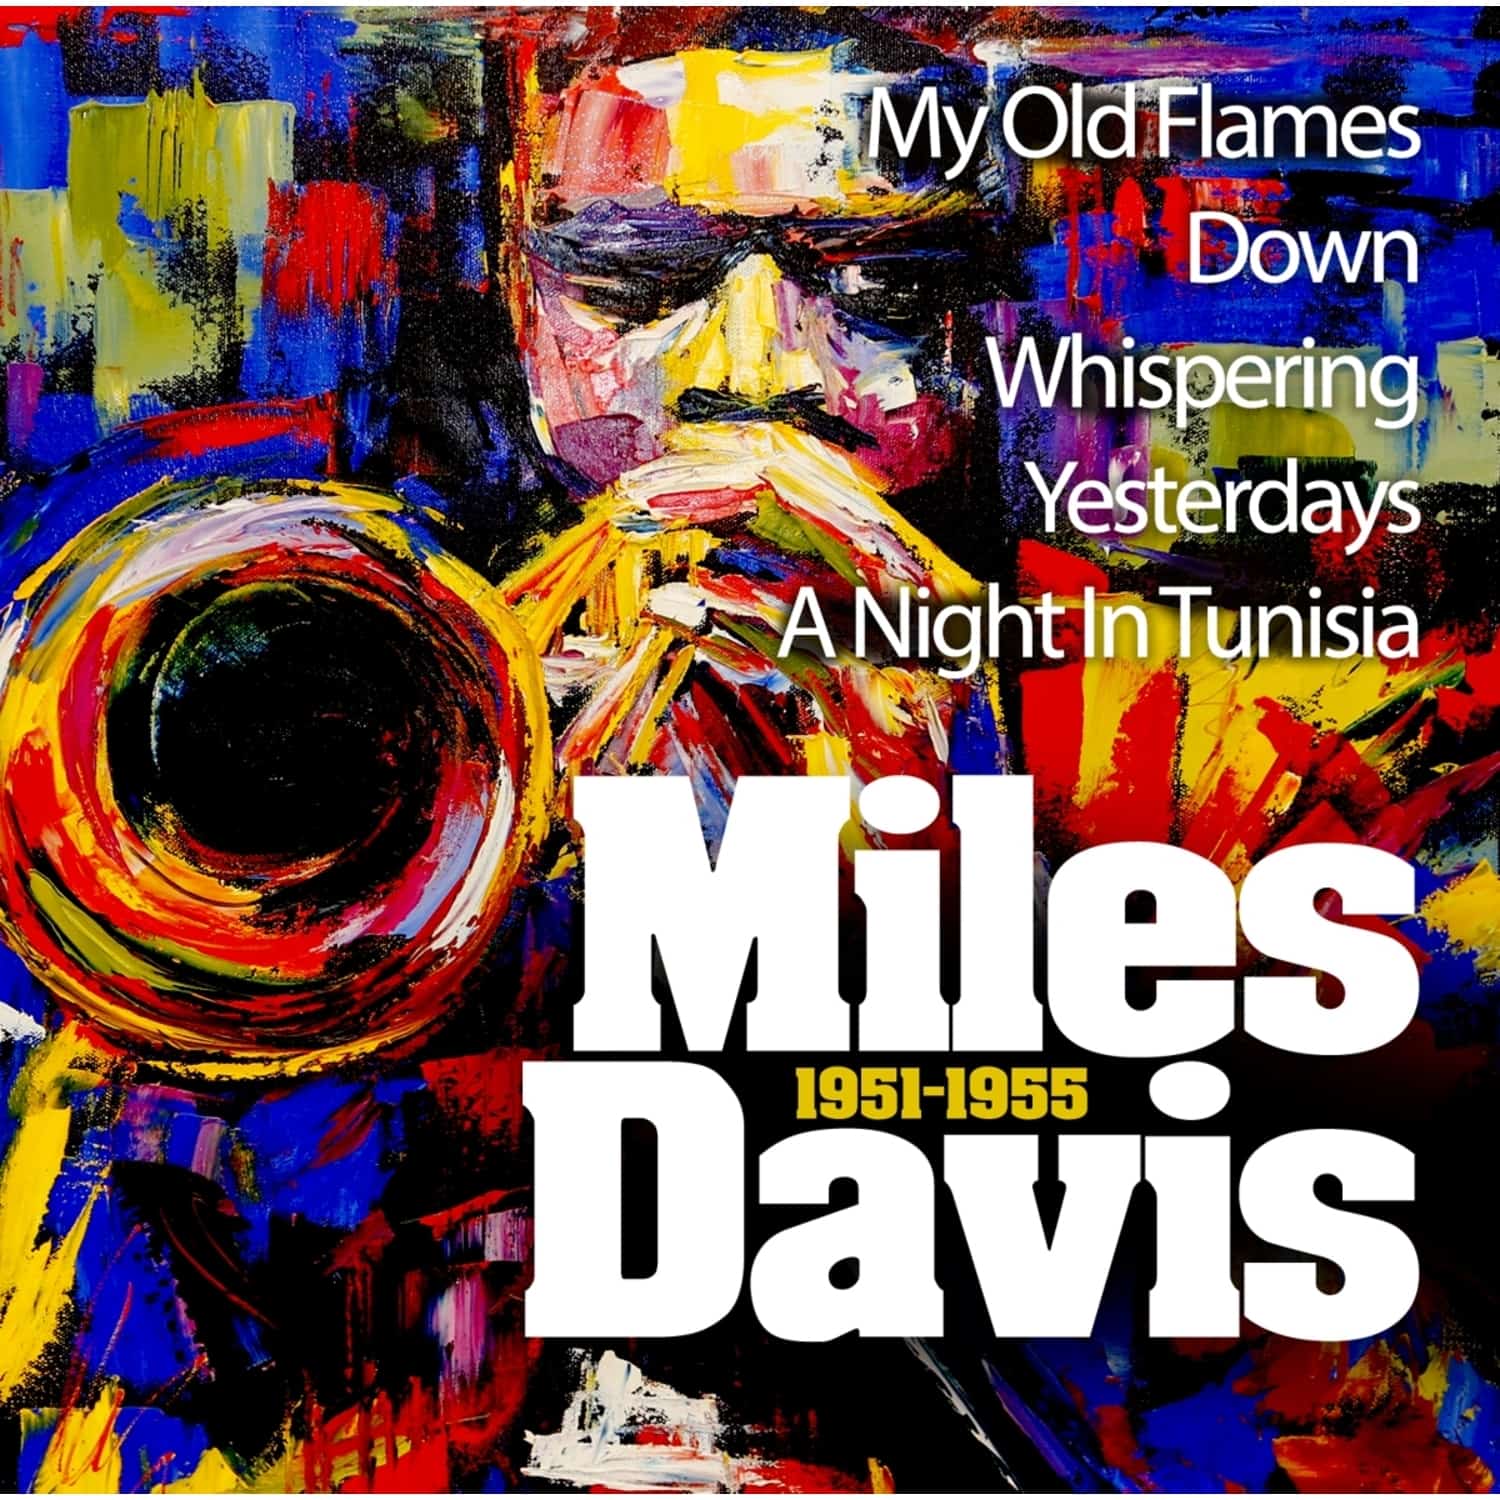 Miles Davis - MILES DAVIS 1951-1955 